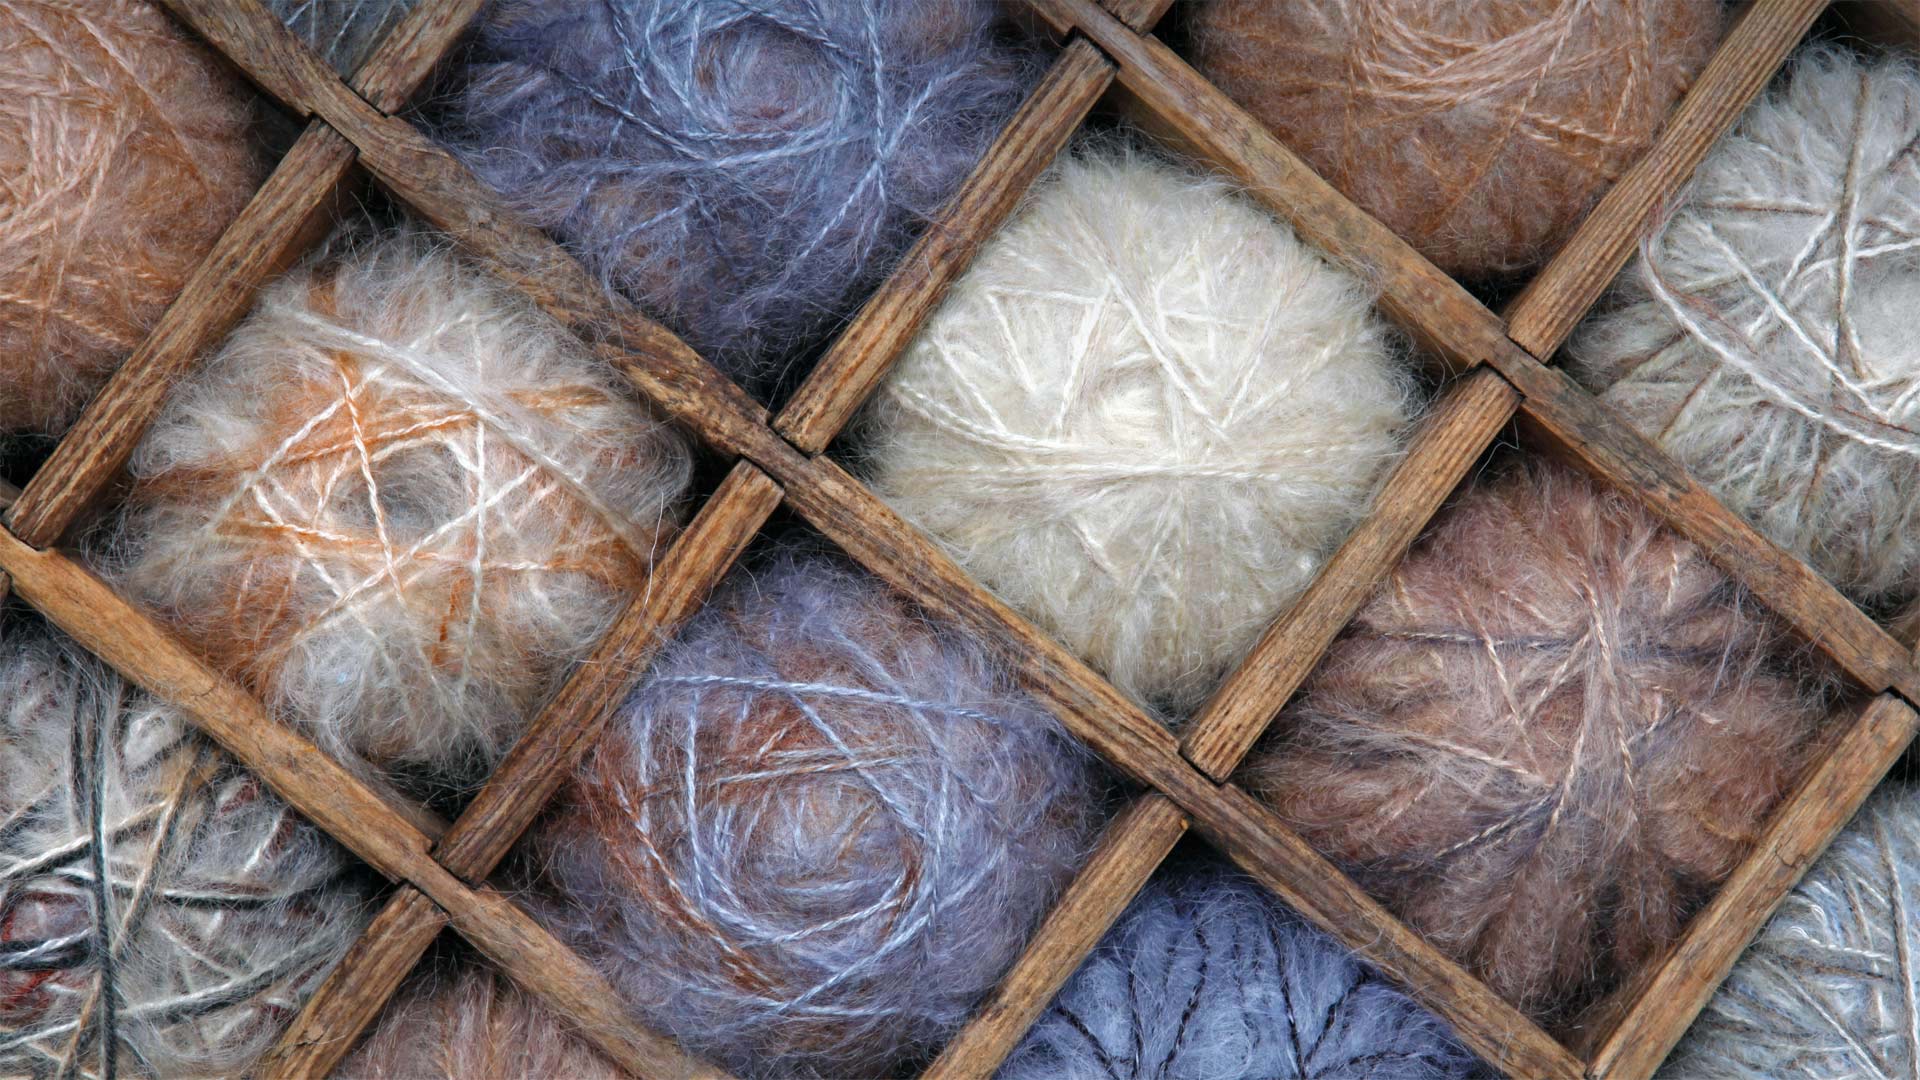 Wool and mohair yarn - Jurate Buiviene/Alamy)